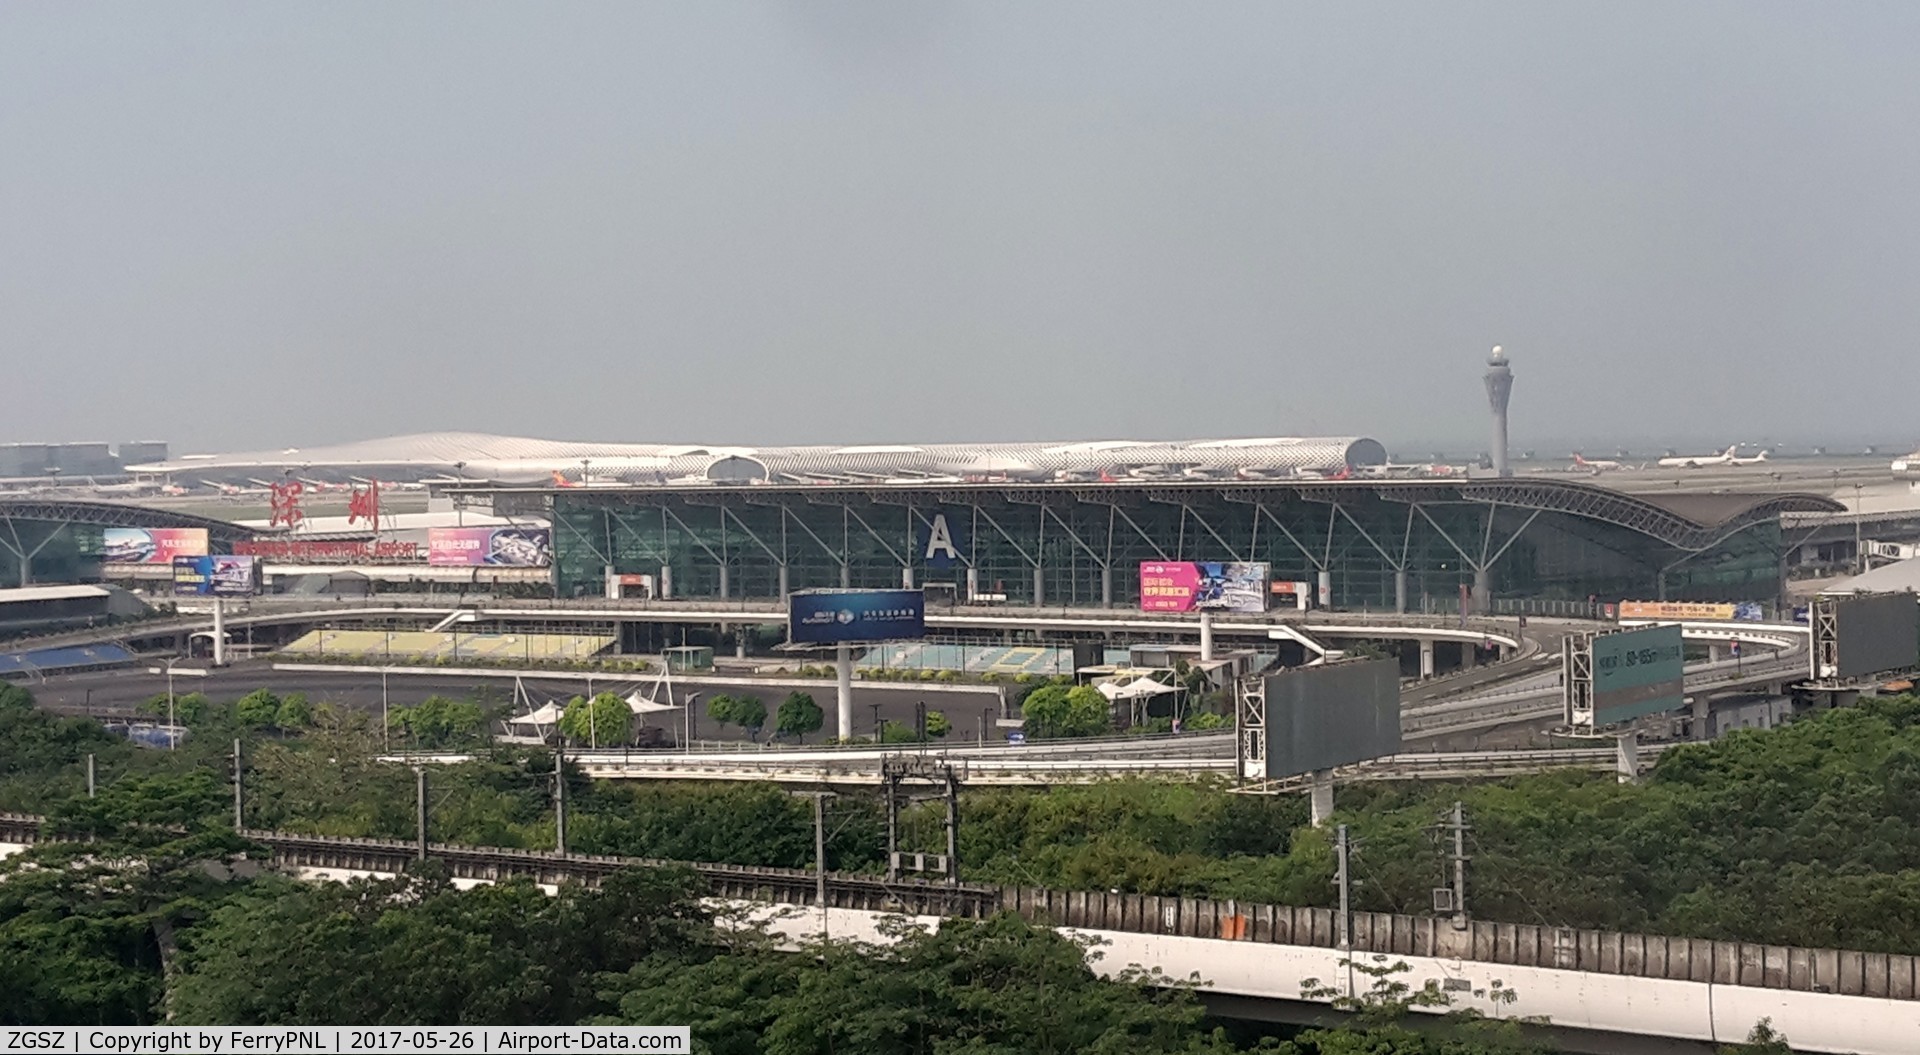 Shenzhen Bao'an International Airport, Shenzhen, Guangdong China (ZGSZ) - Shenzhen Airport view from hotel over the 'old' terminal.